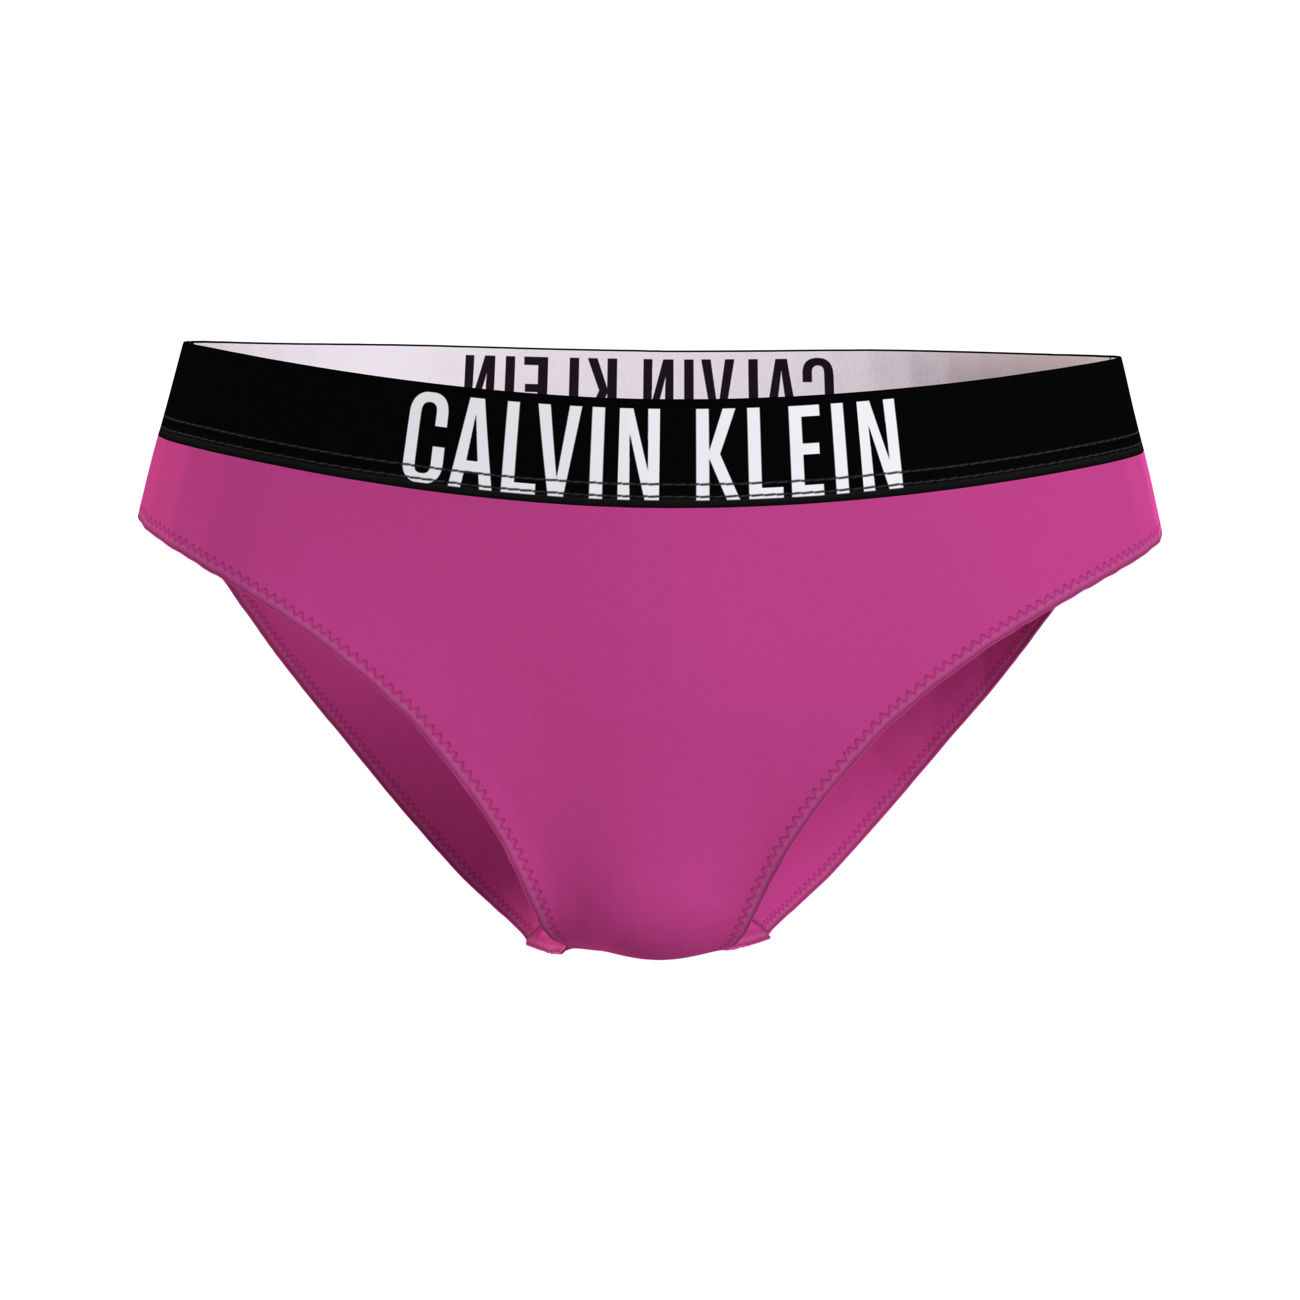 Calvin Klein one shoulder monogram bikini top in white